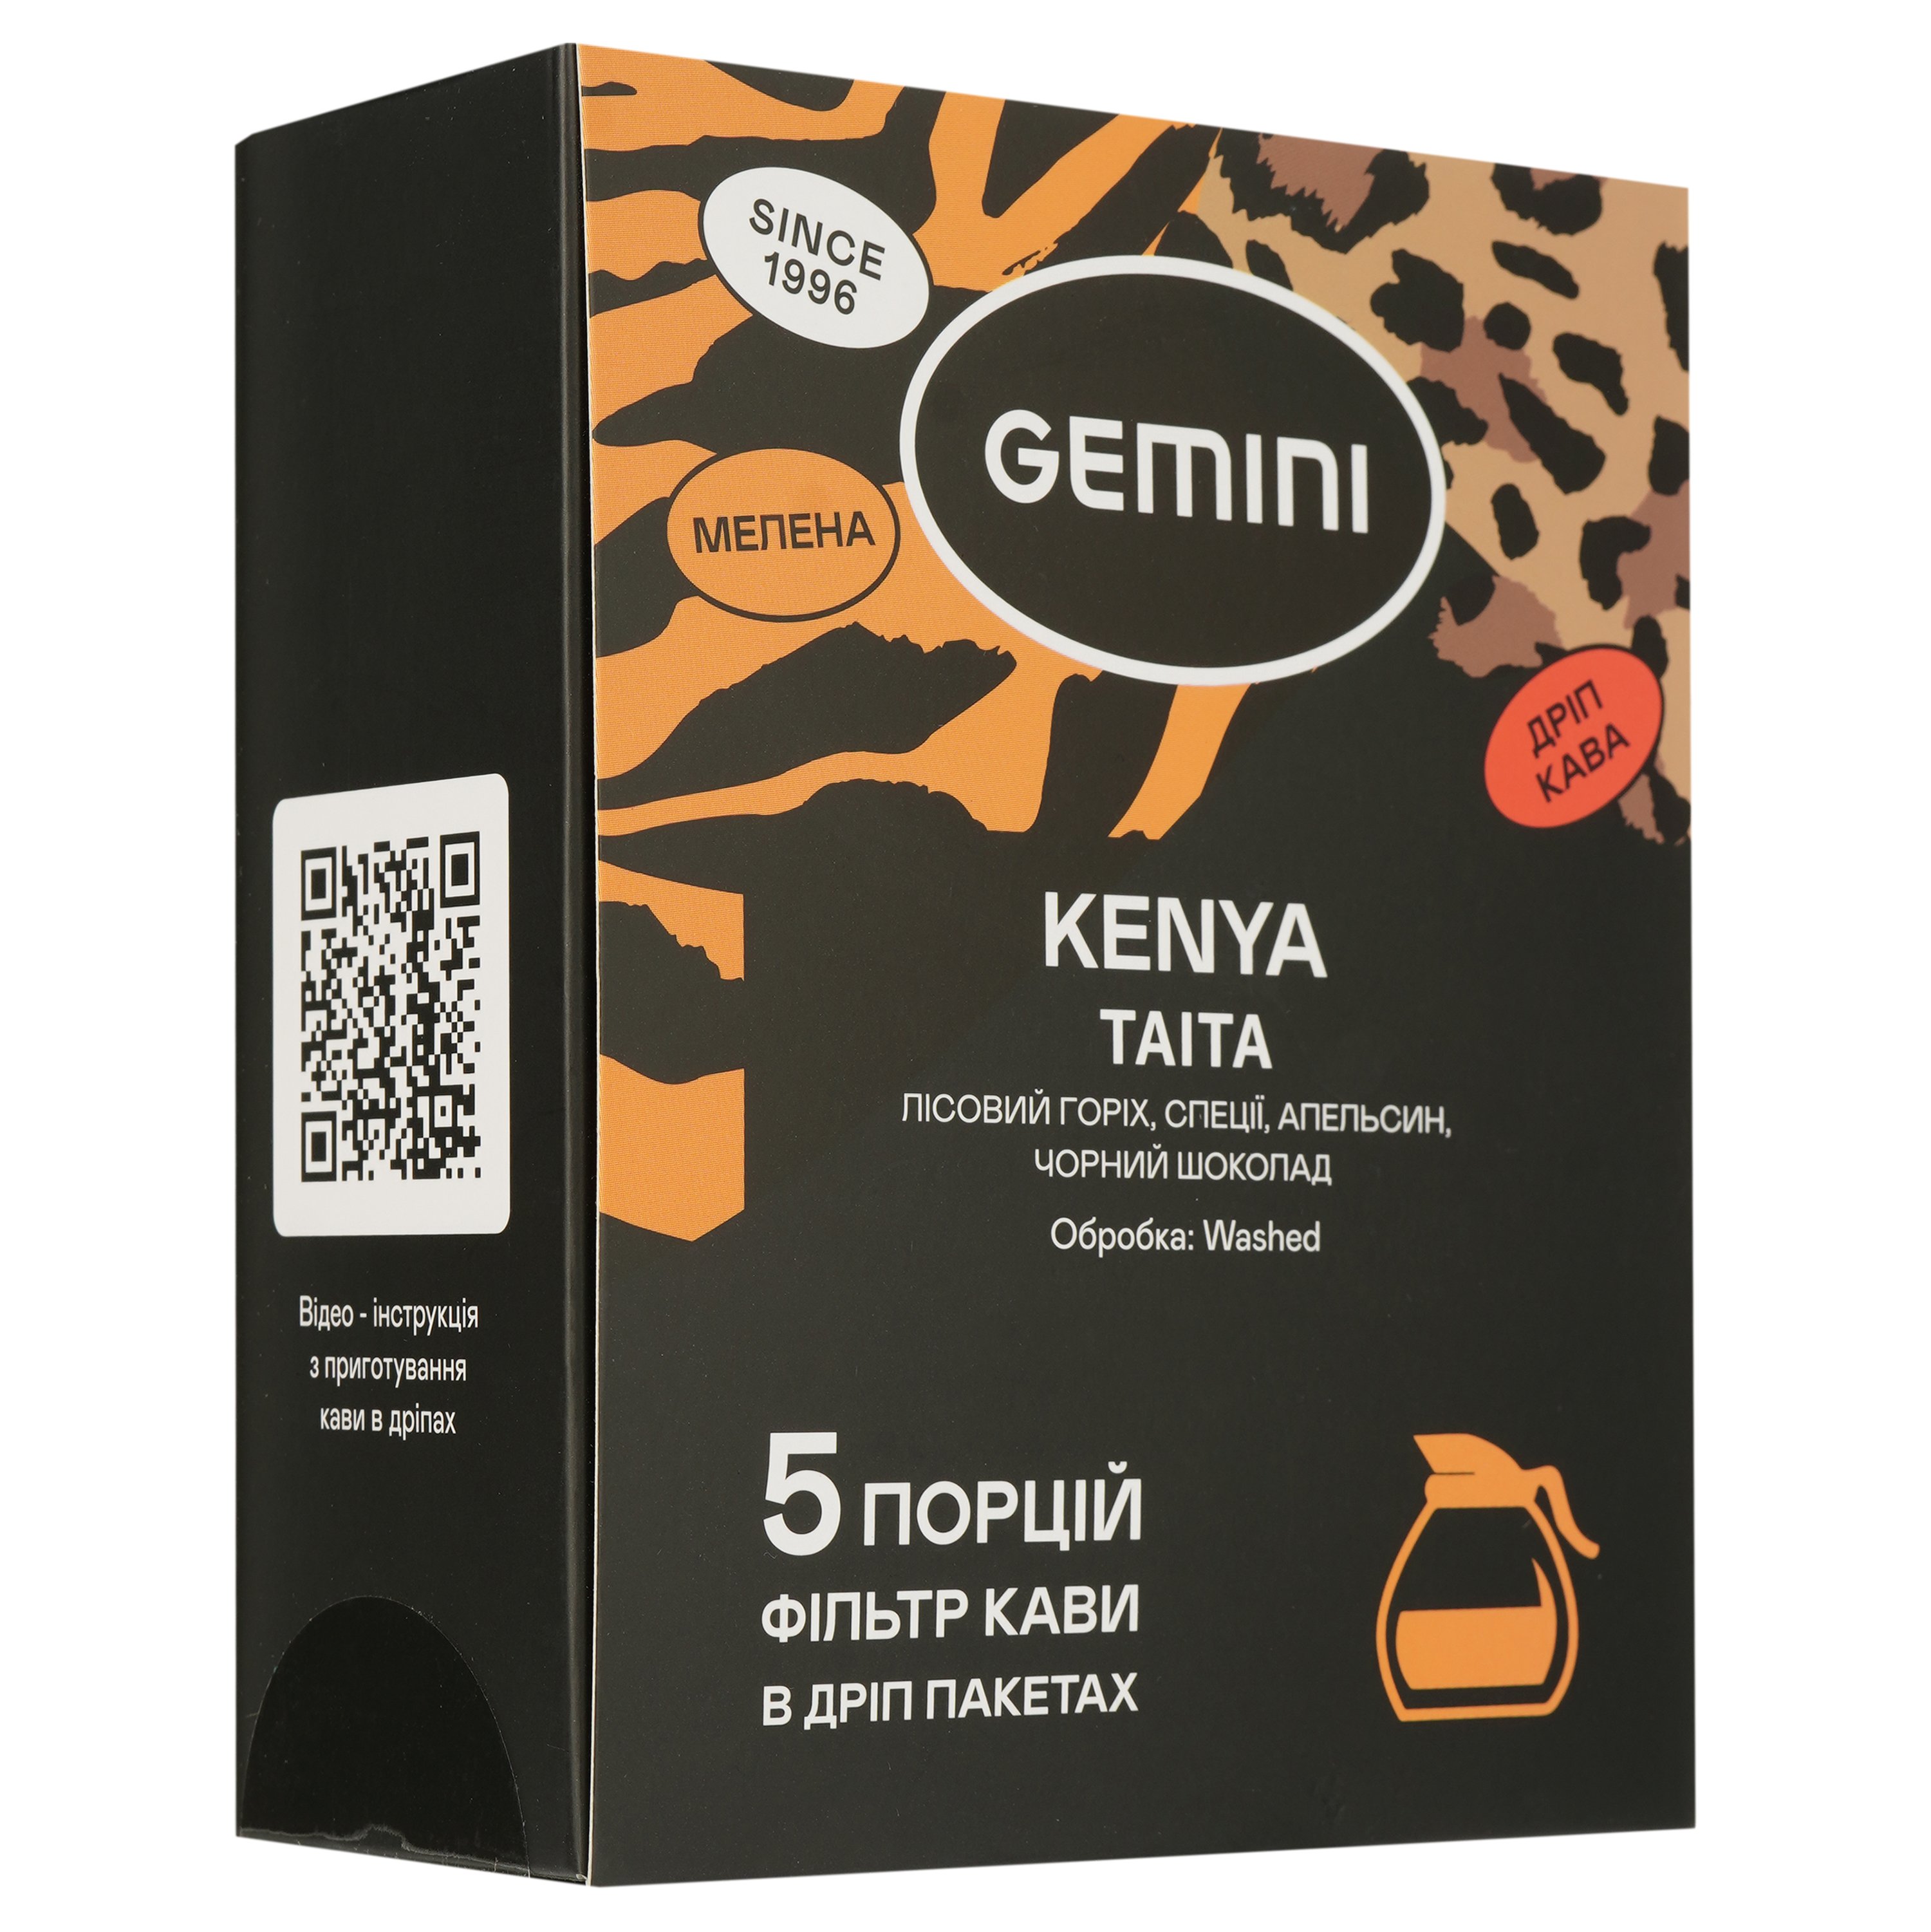 Дрип-кофе Gemini Kenya Taita drip coffee bags 60 г (5 шт. по 12 г) - фото 2